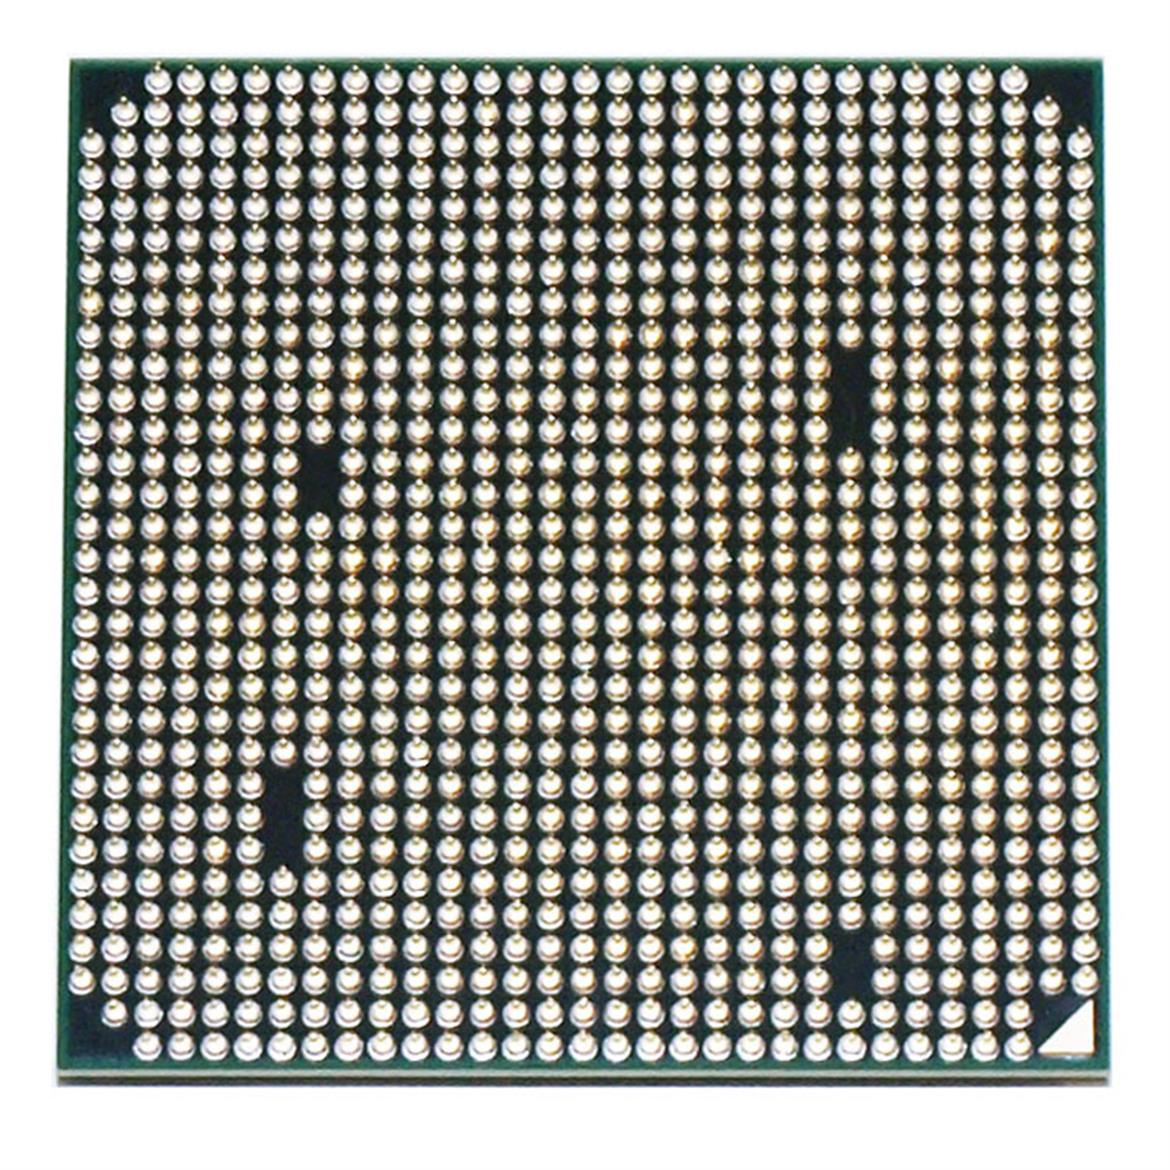 AMD Athlon II X4 640: 4-Cores On The Cheap